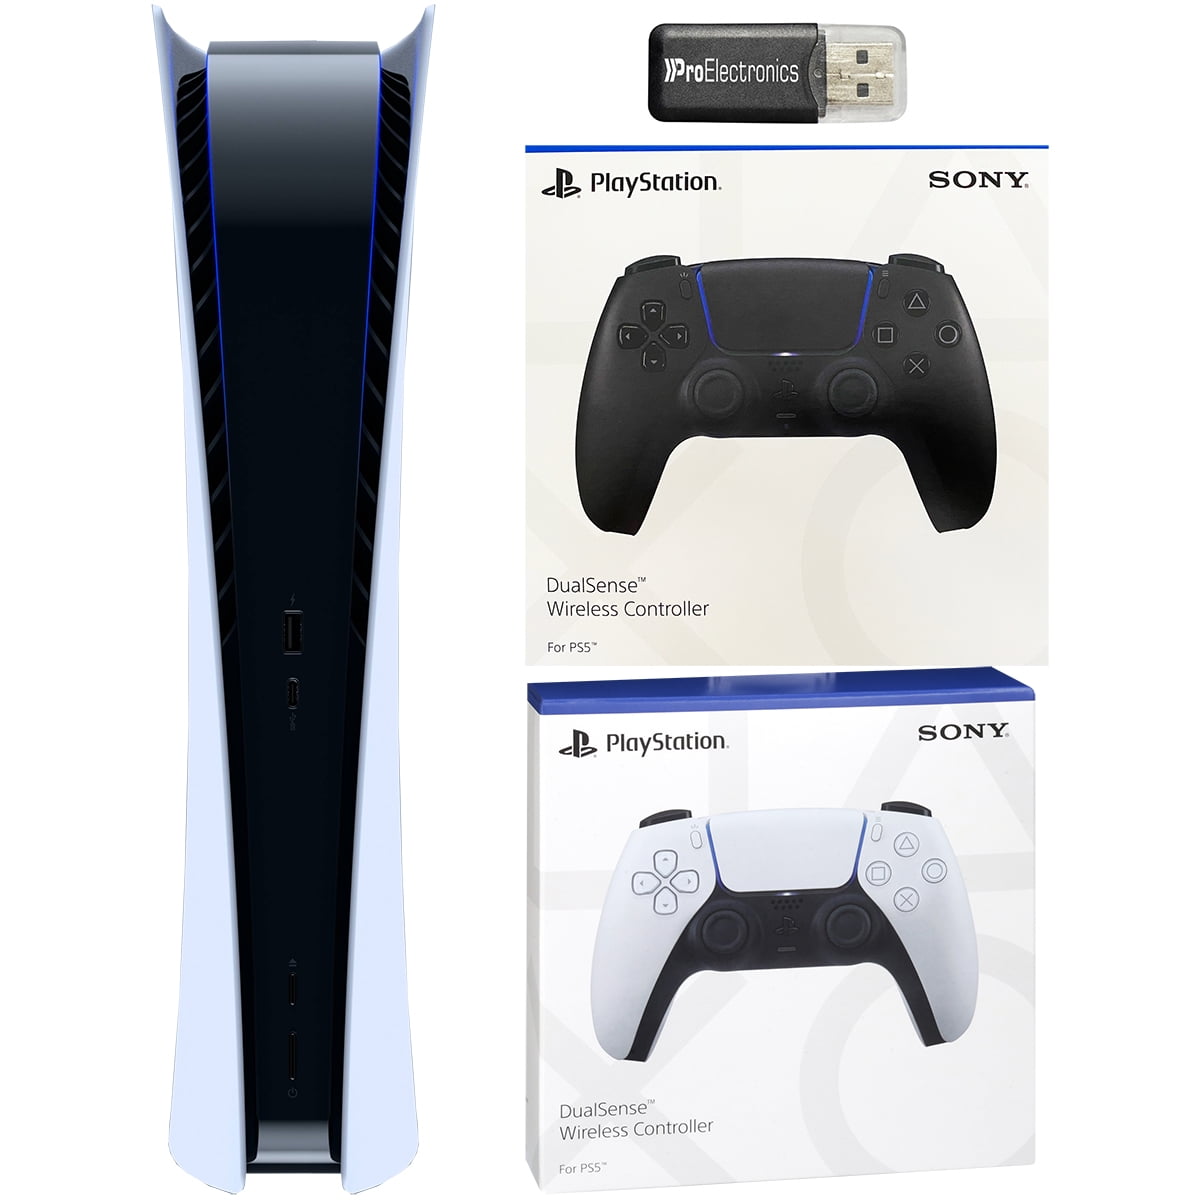 Sony PlayStation 5 - PS5 Digital Edition (Accessories Bundle)